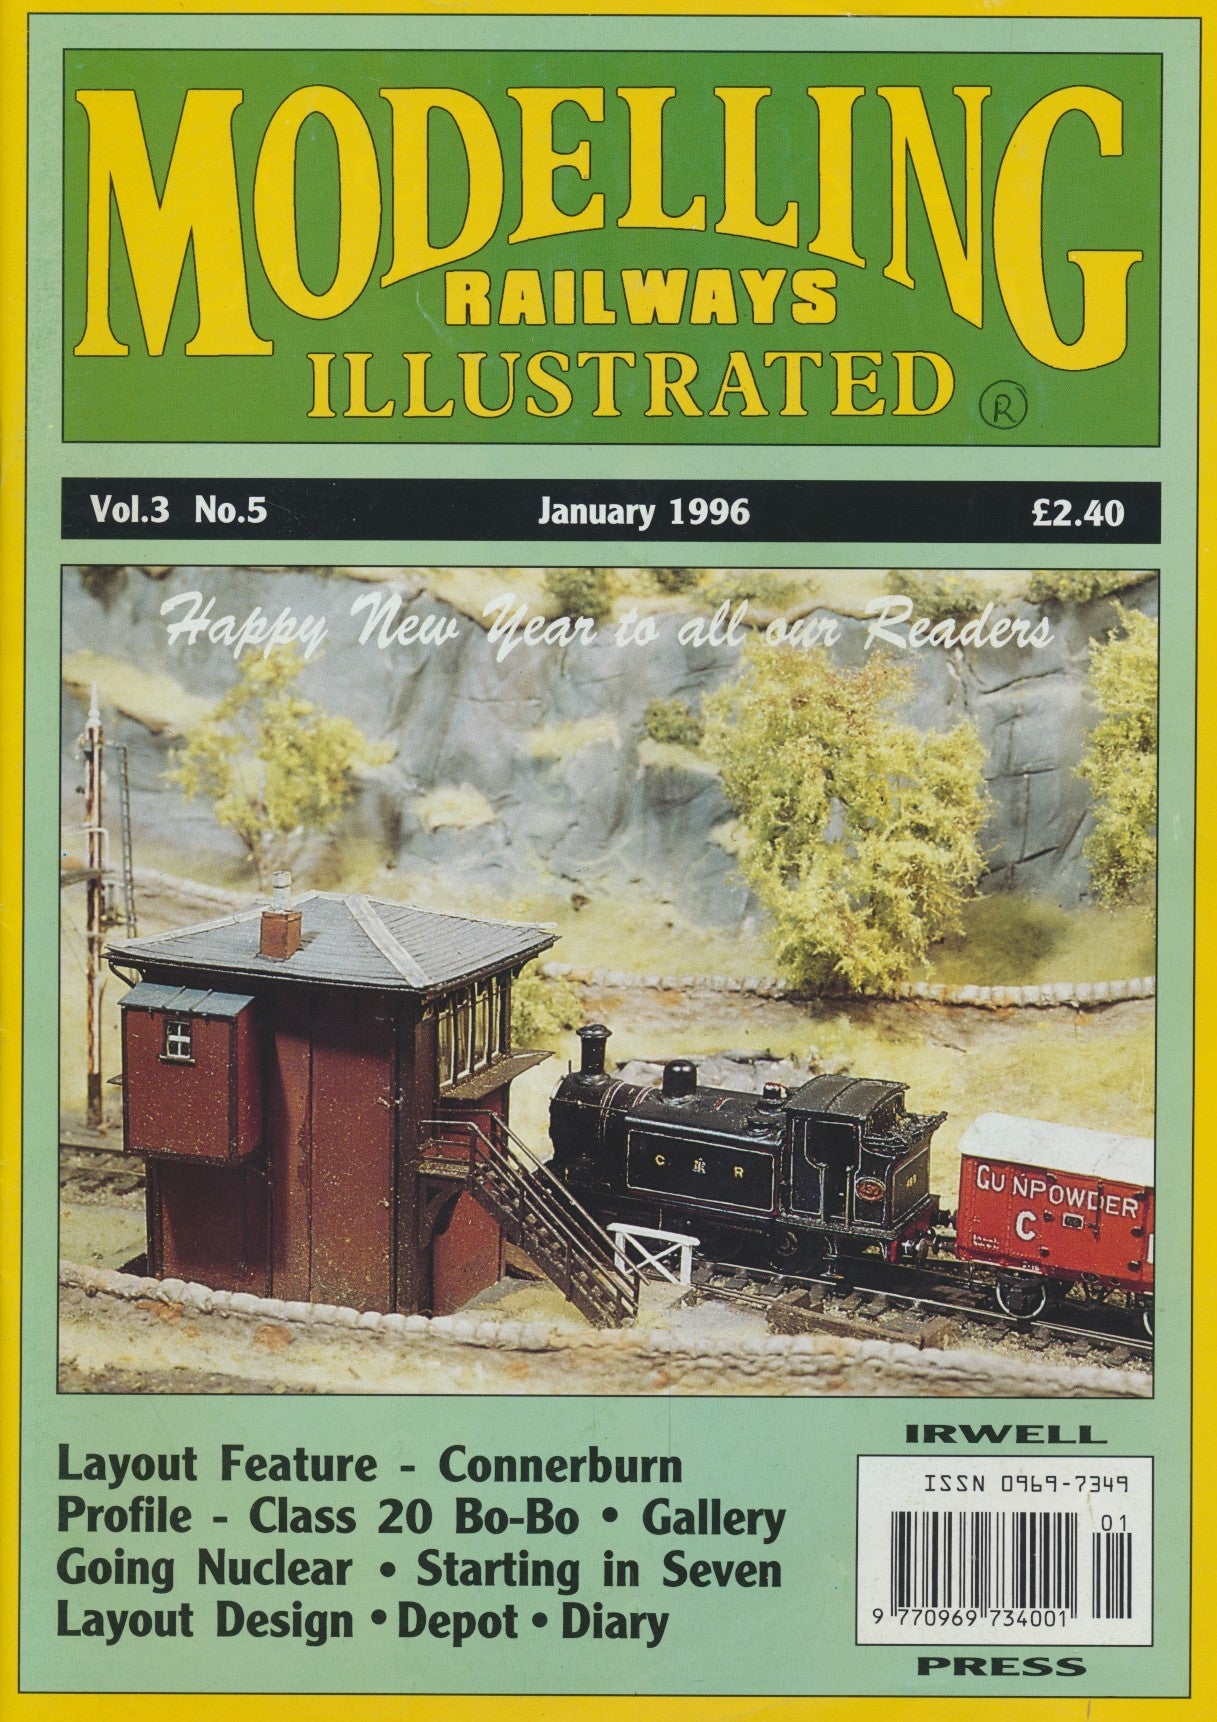 Modelling Railways Illustrated: Vol. 3 No. 5 - January 1996